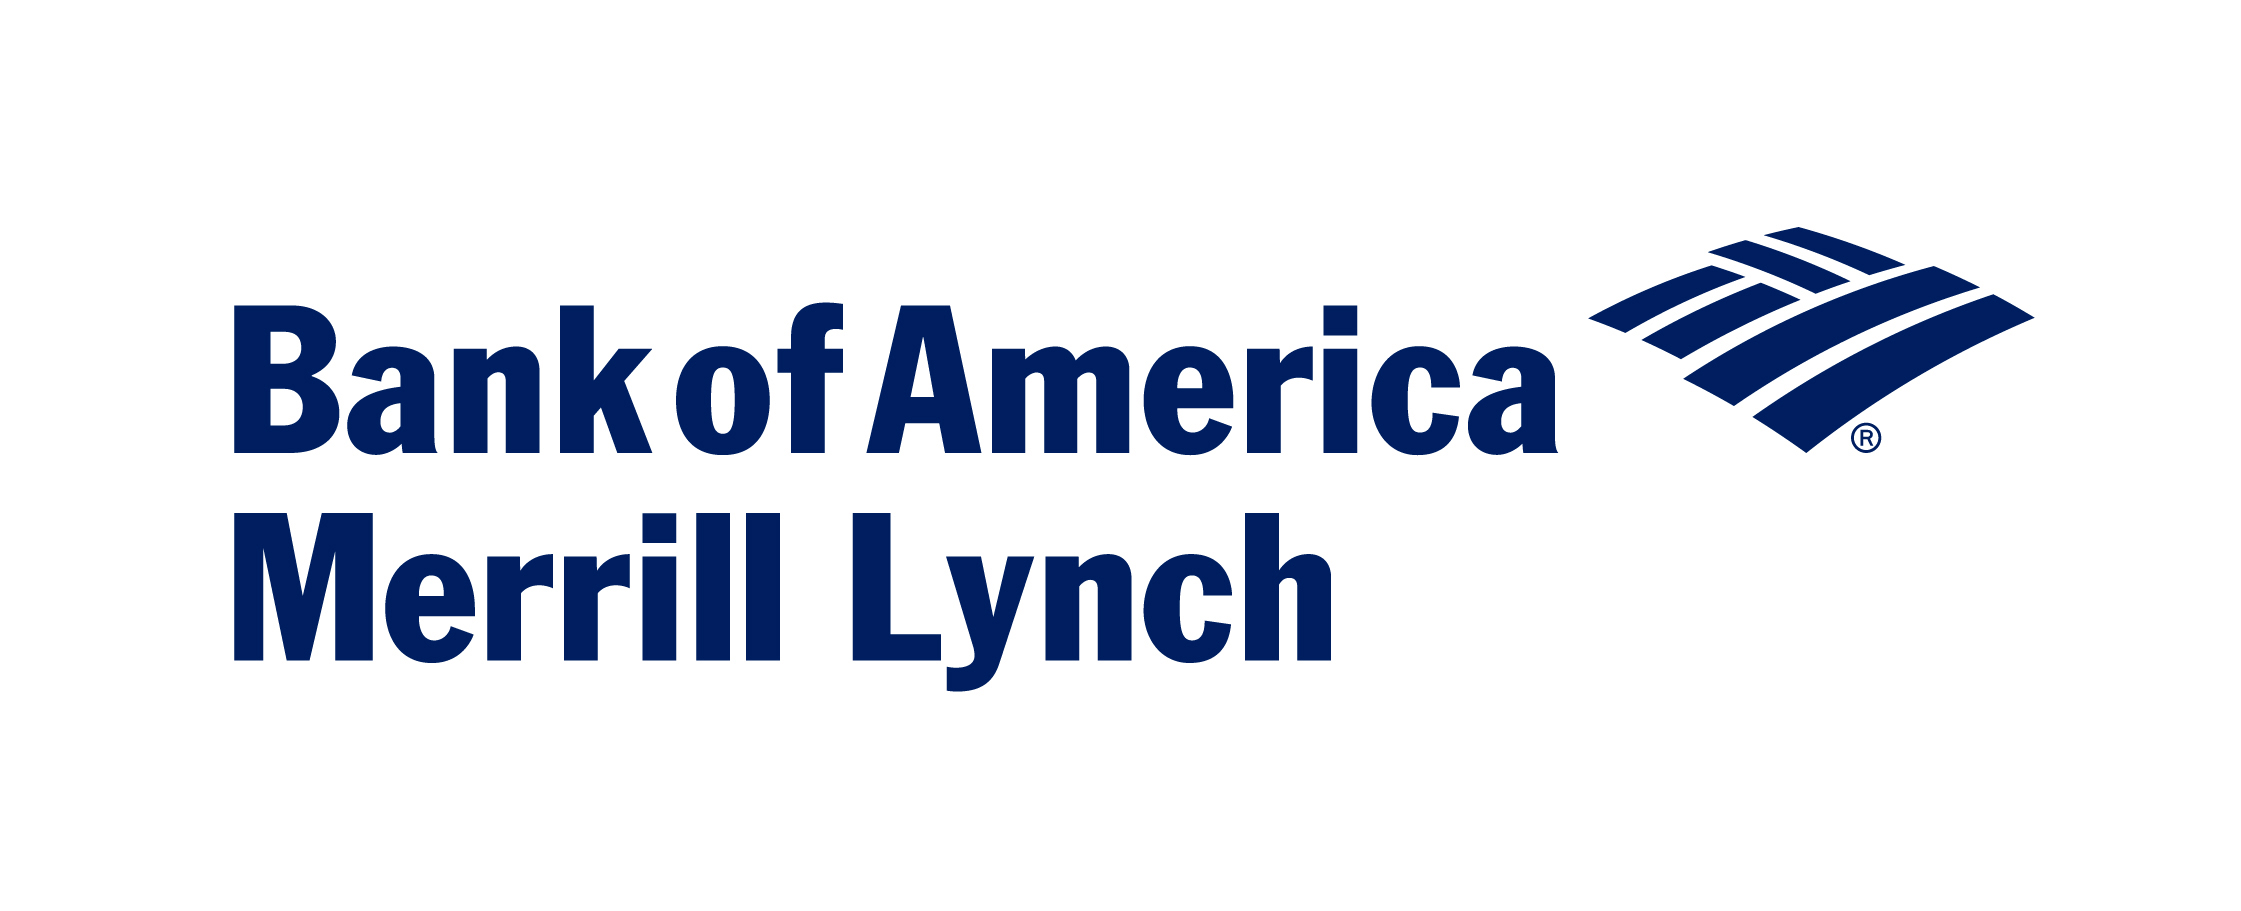 Bank_of_America_Merrill_Lynch_RGB_300.jpg